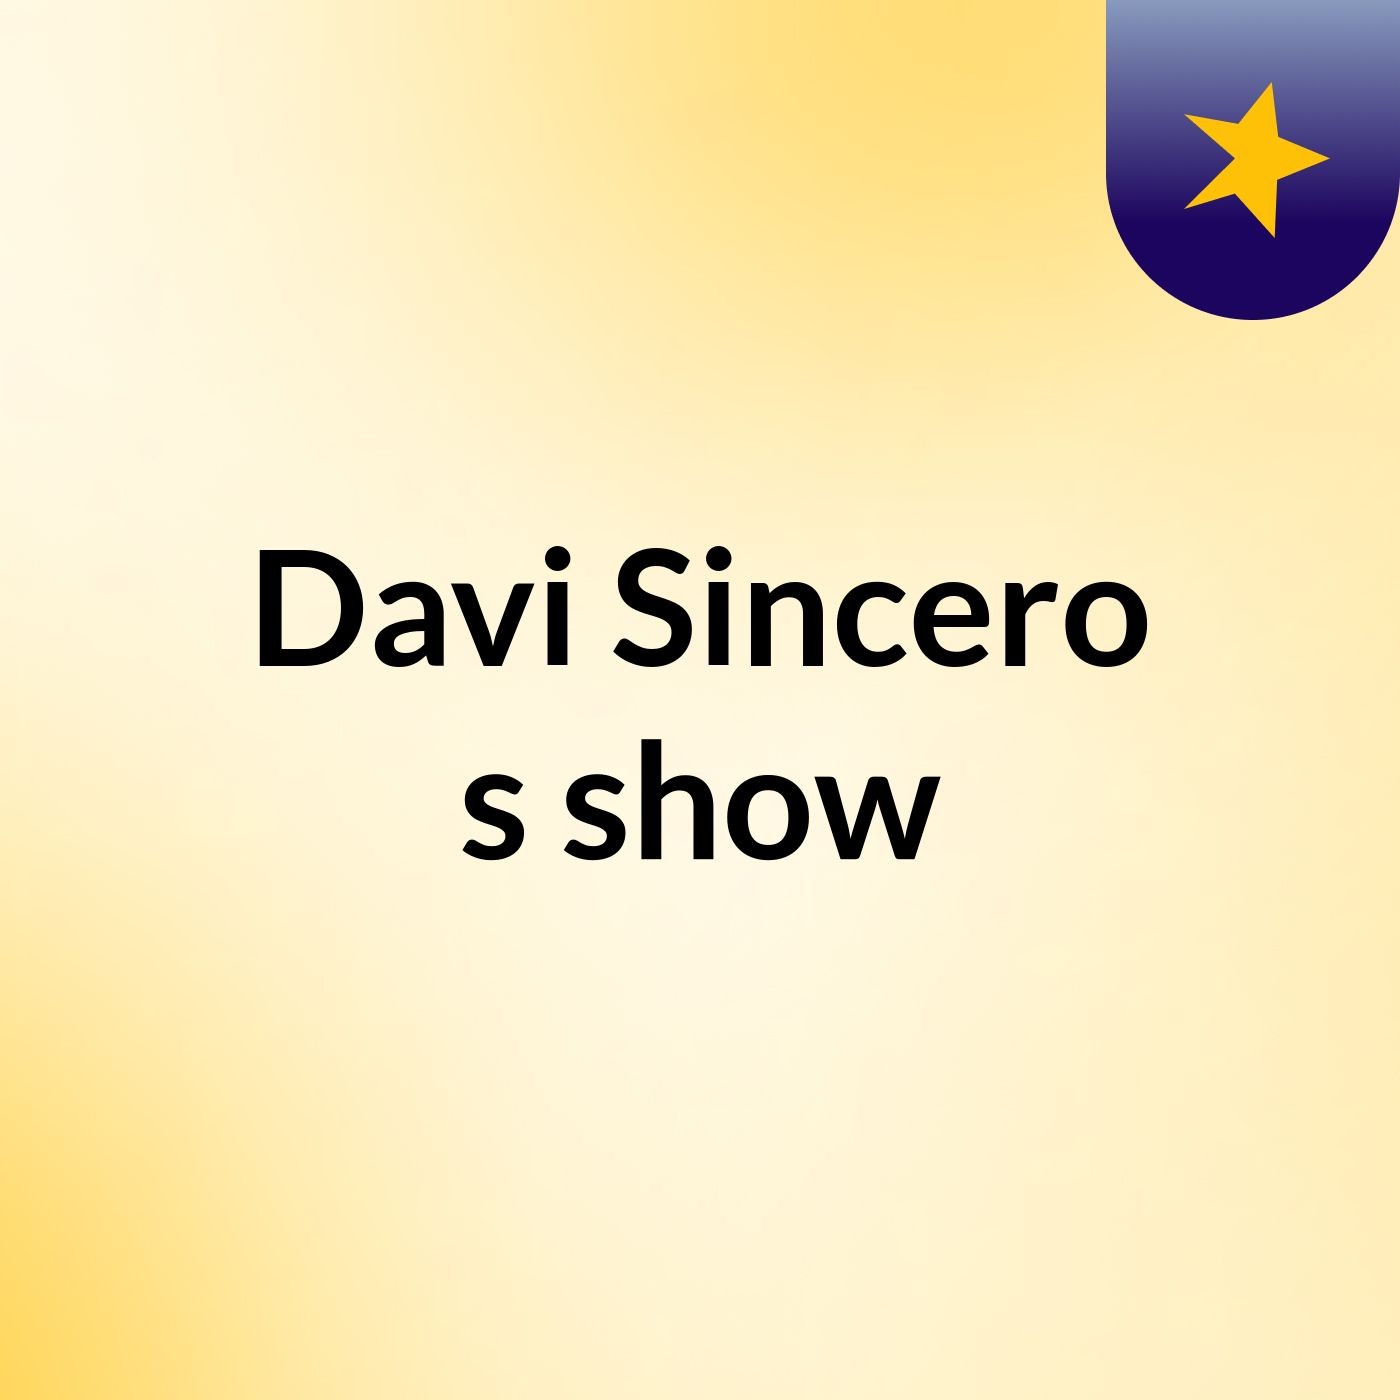 Davi Sincero's show